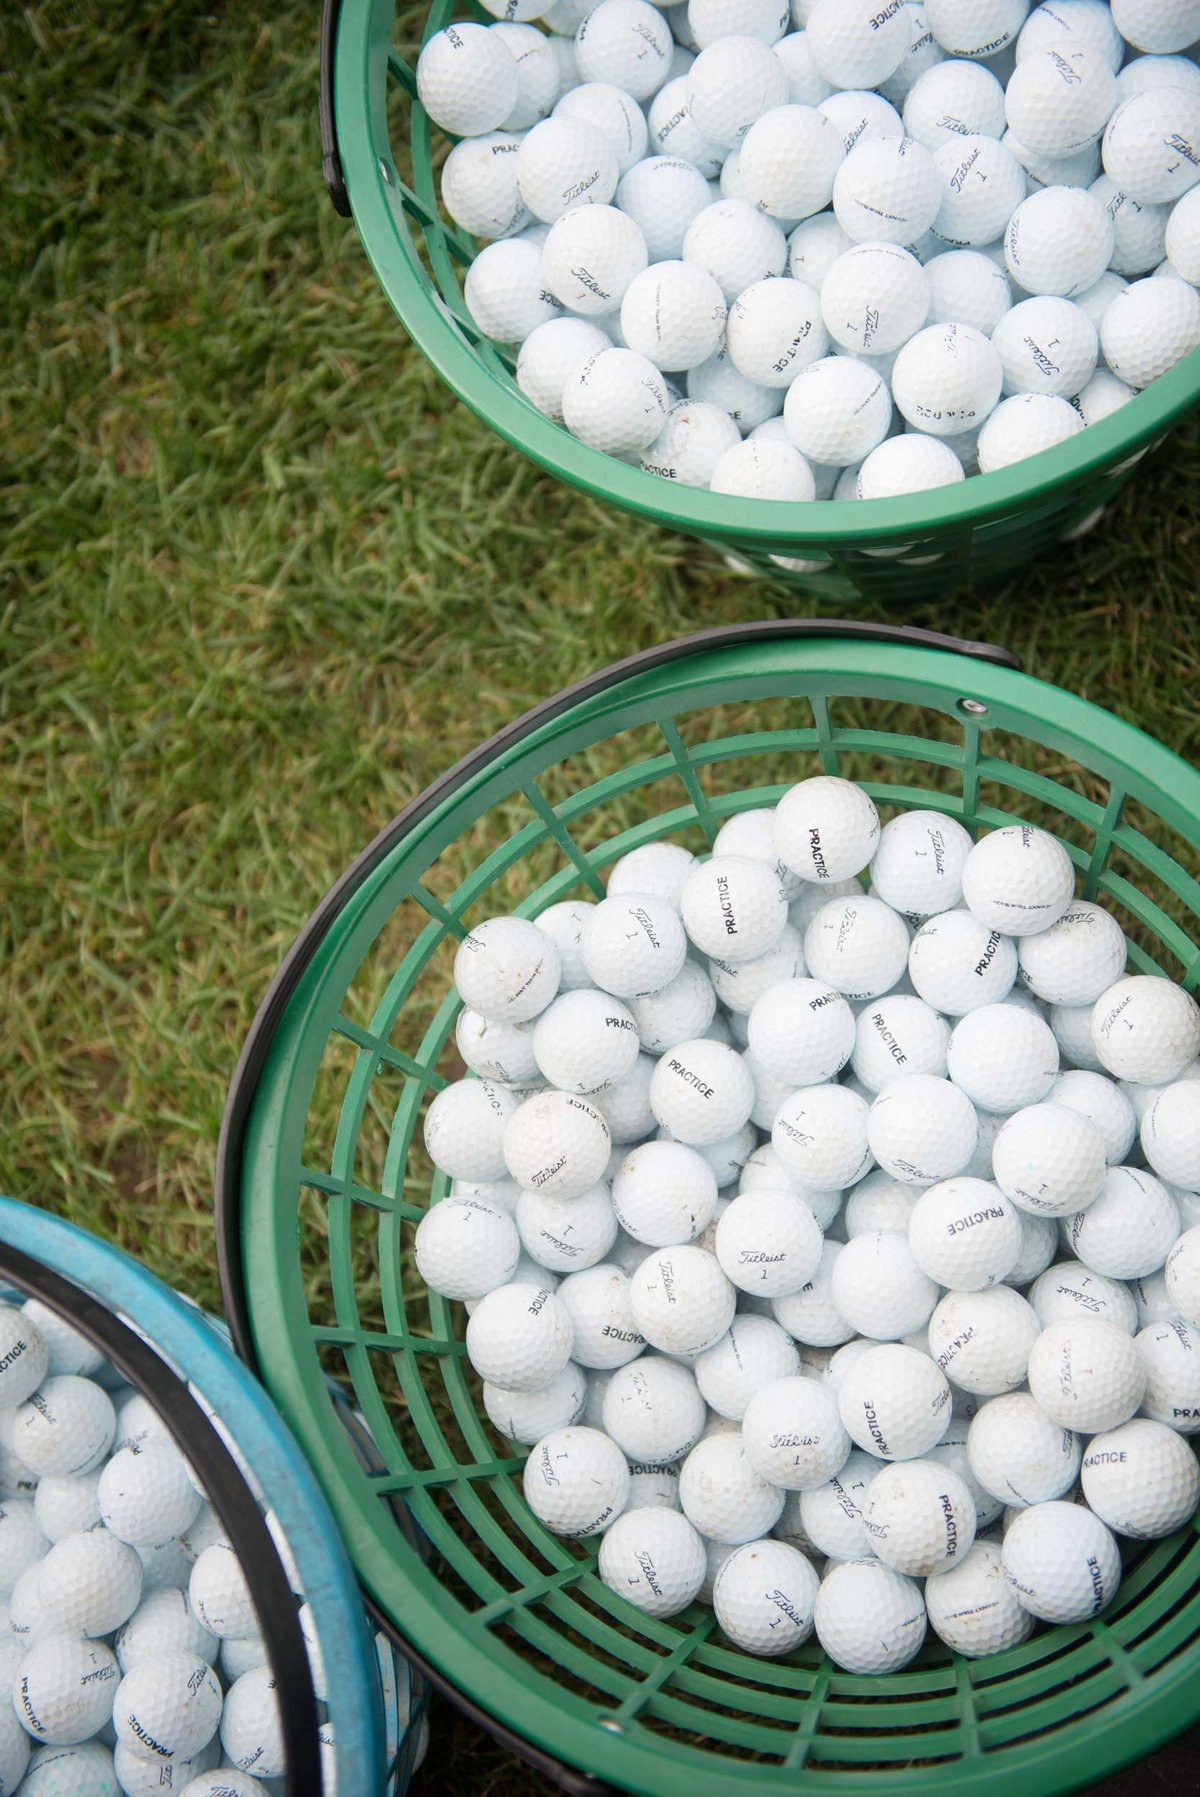 Buckets of golf balls at Huntington Crescent Club